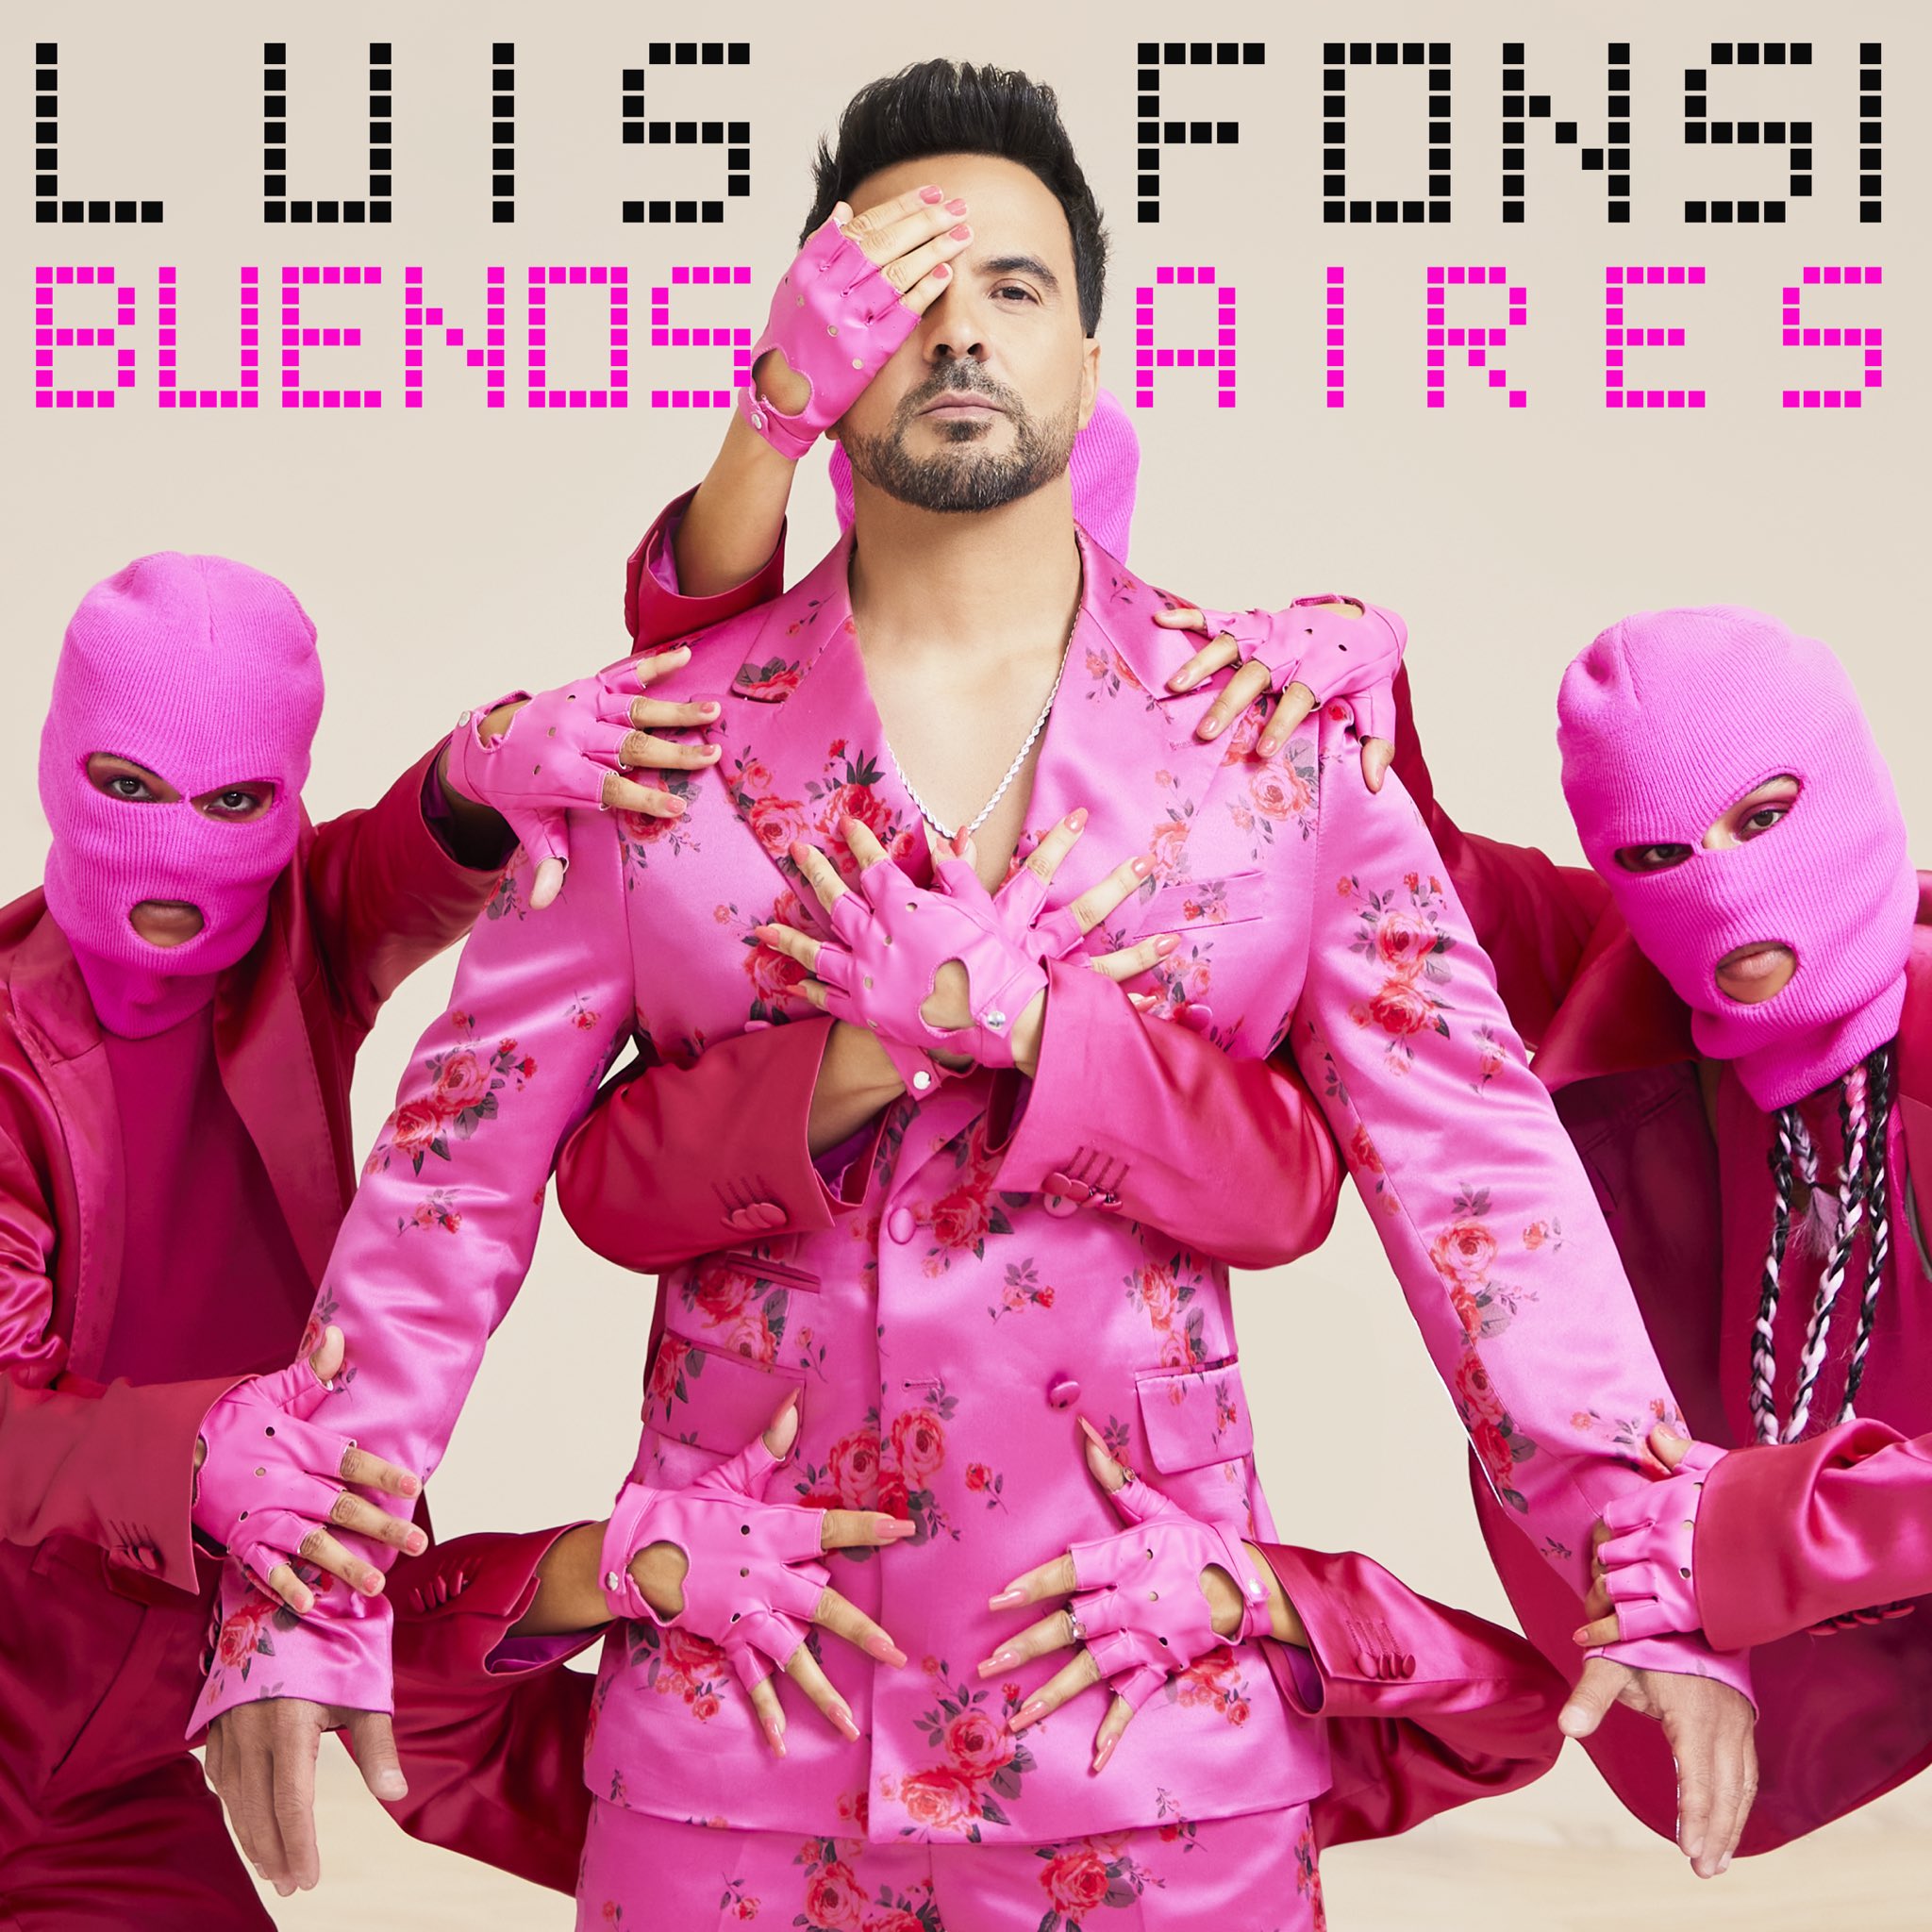 Luis Fonsi - Buenos Aires - Testo Traduzione Significato